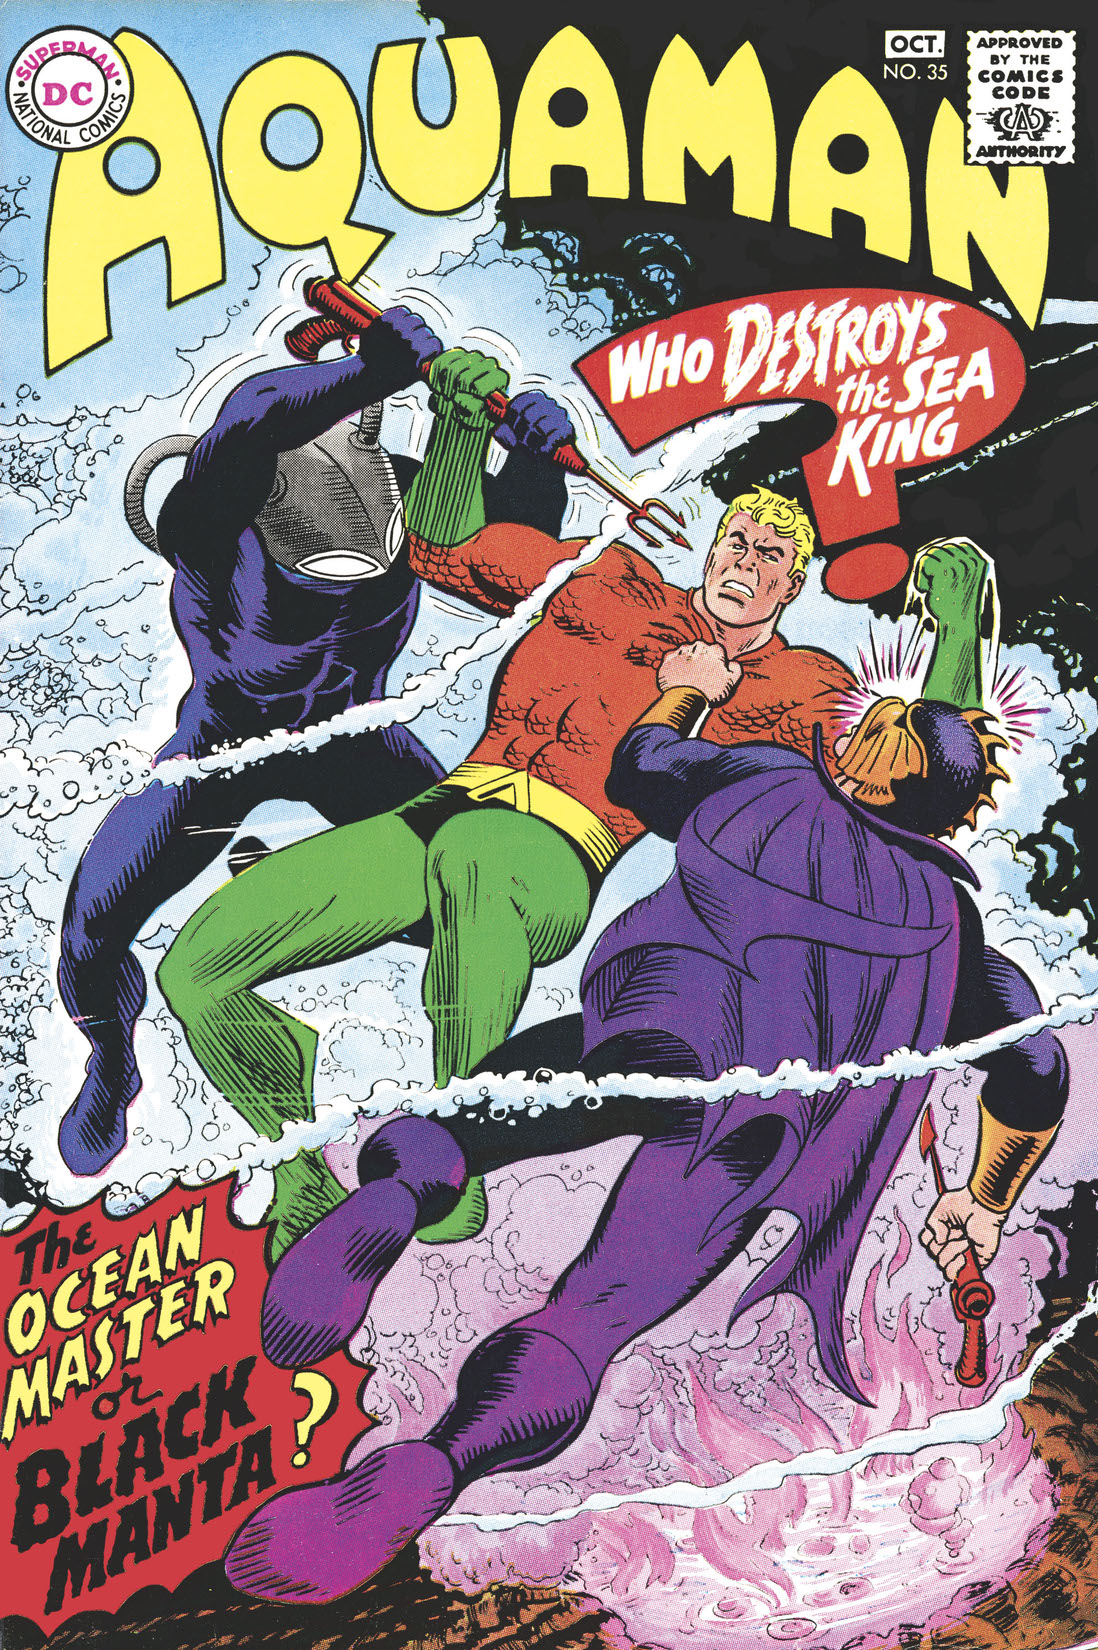 Aquaman (1962-) #35 preview images